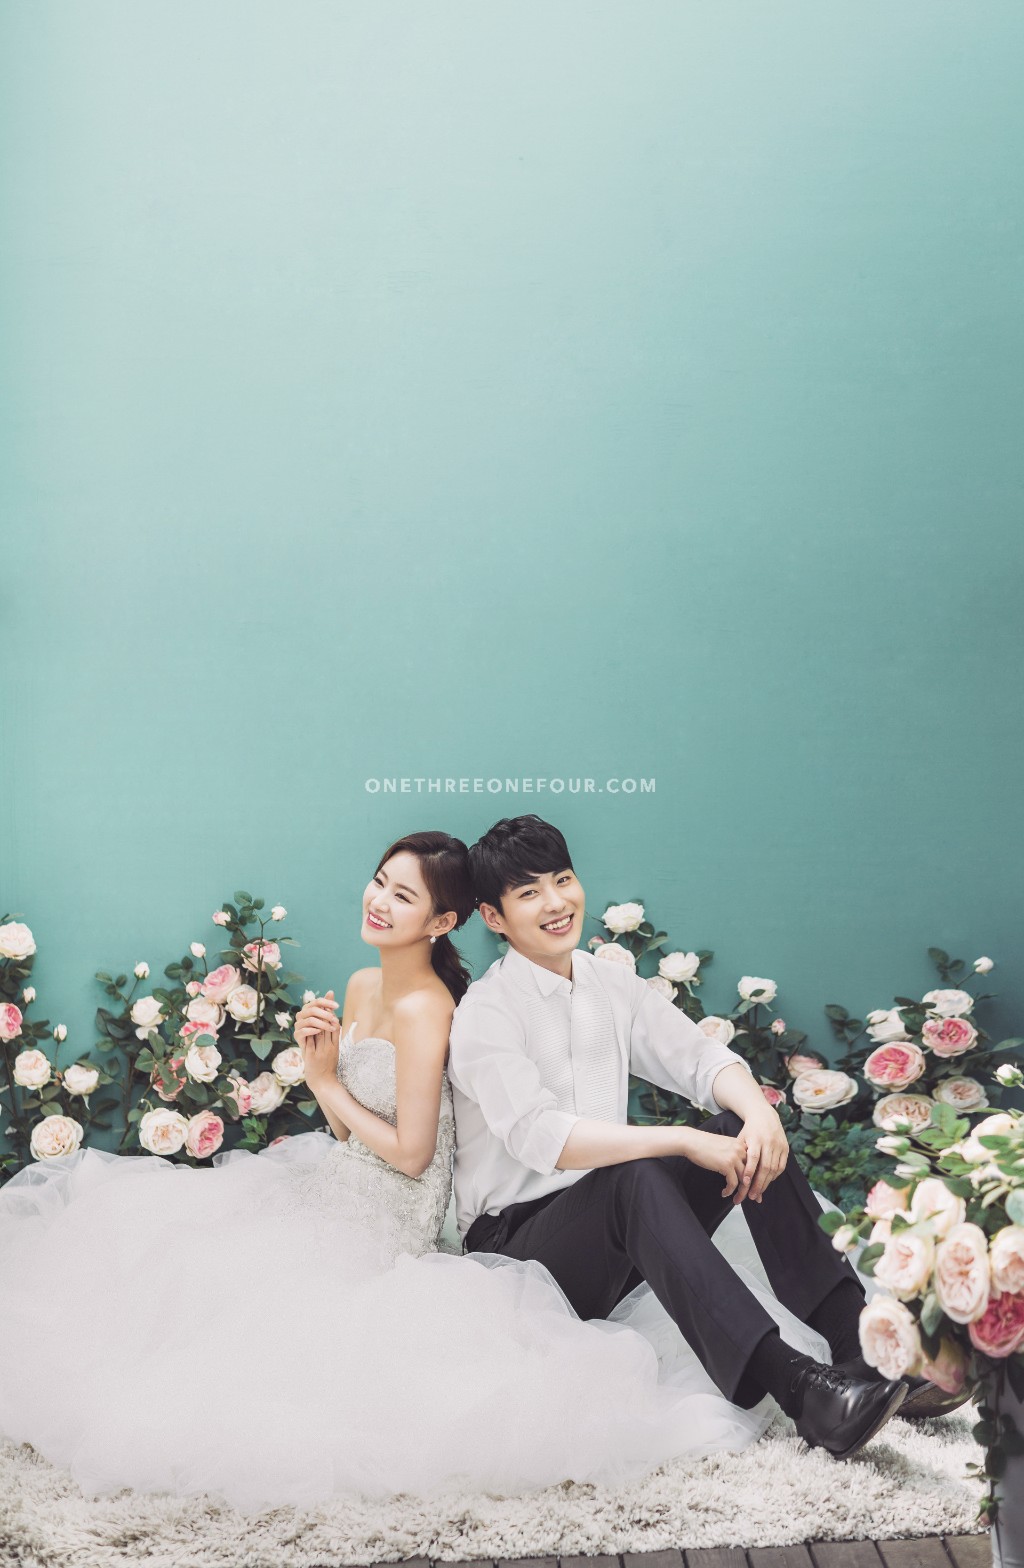 Korean Studio Pre-Wedding Photography: 2017 ePhoto Essay Studio Collection by ePhoto Essay Studio on OneThreeOneFour 36